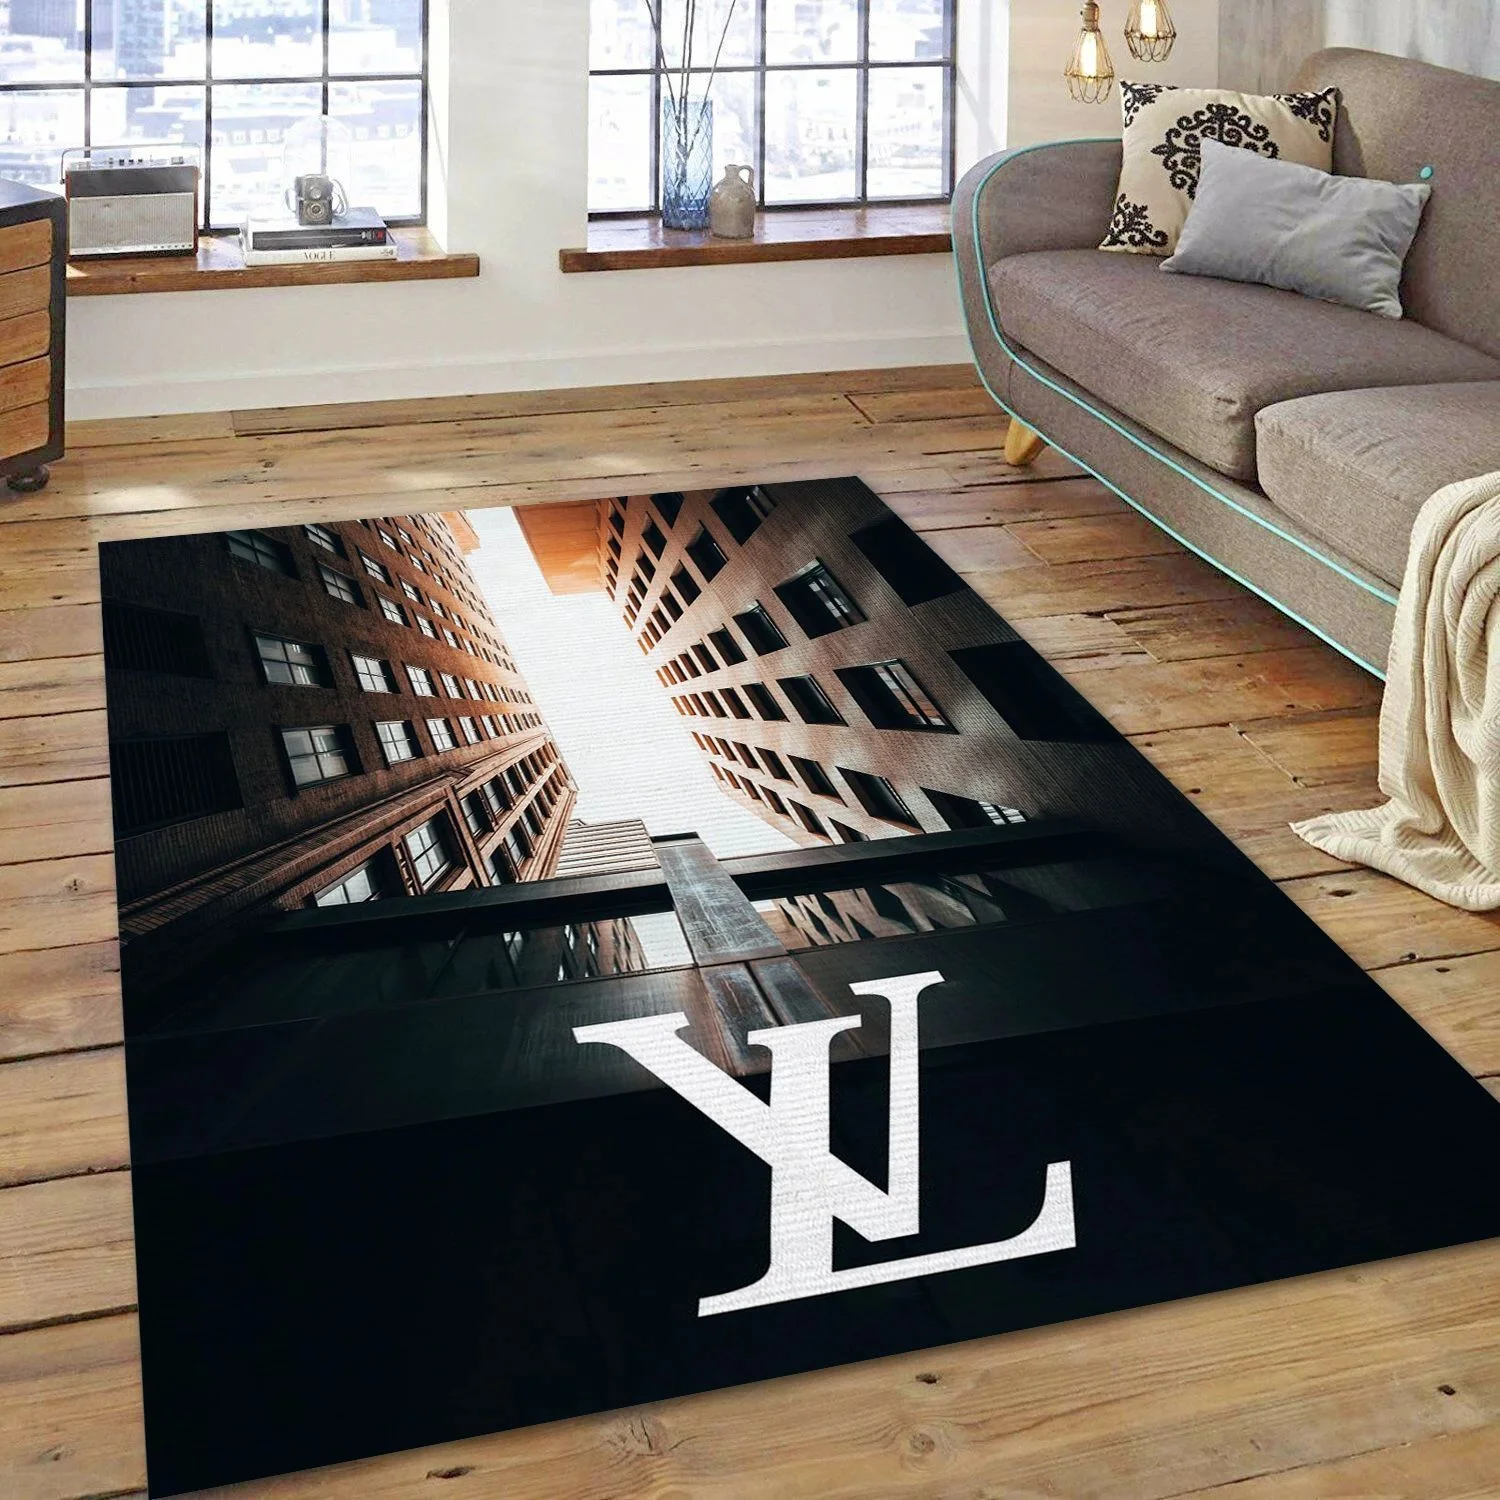 Louis Vuitton Living Room Rug - Peto Rugs